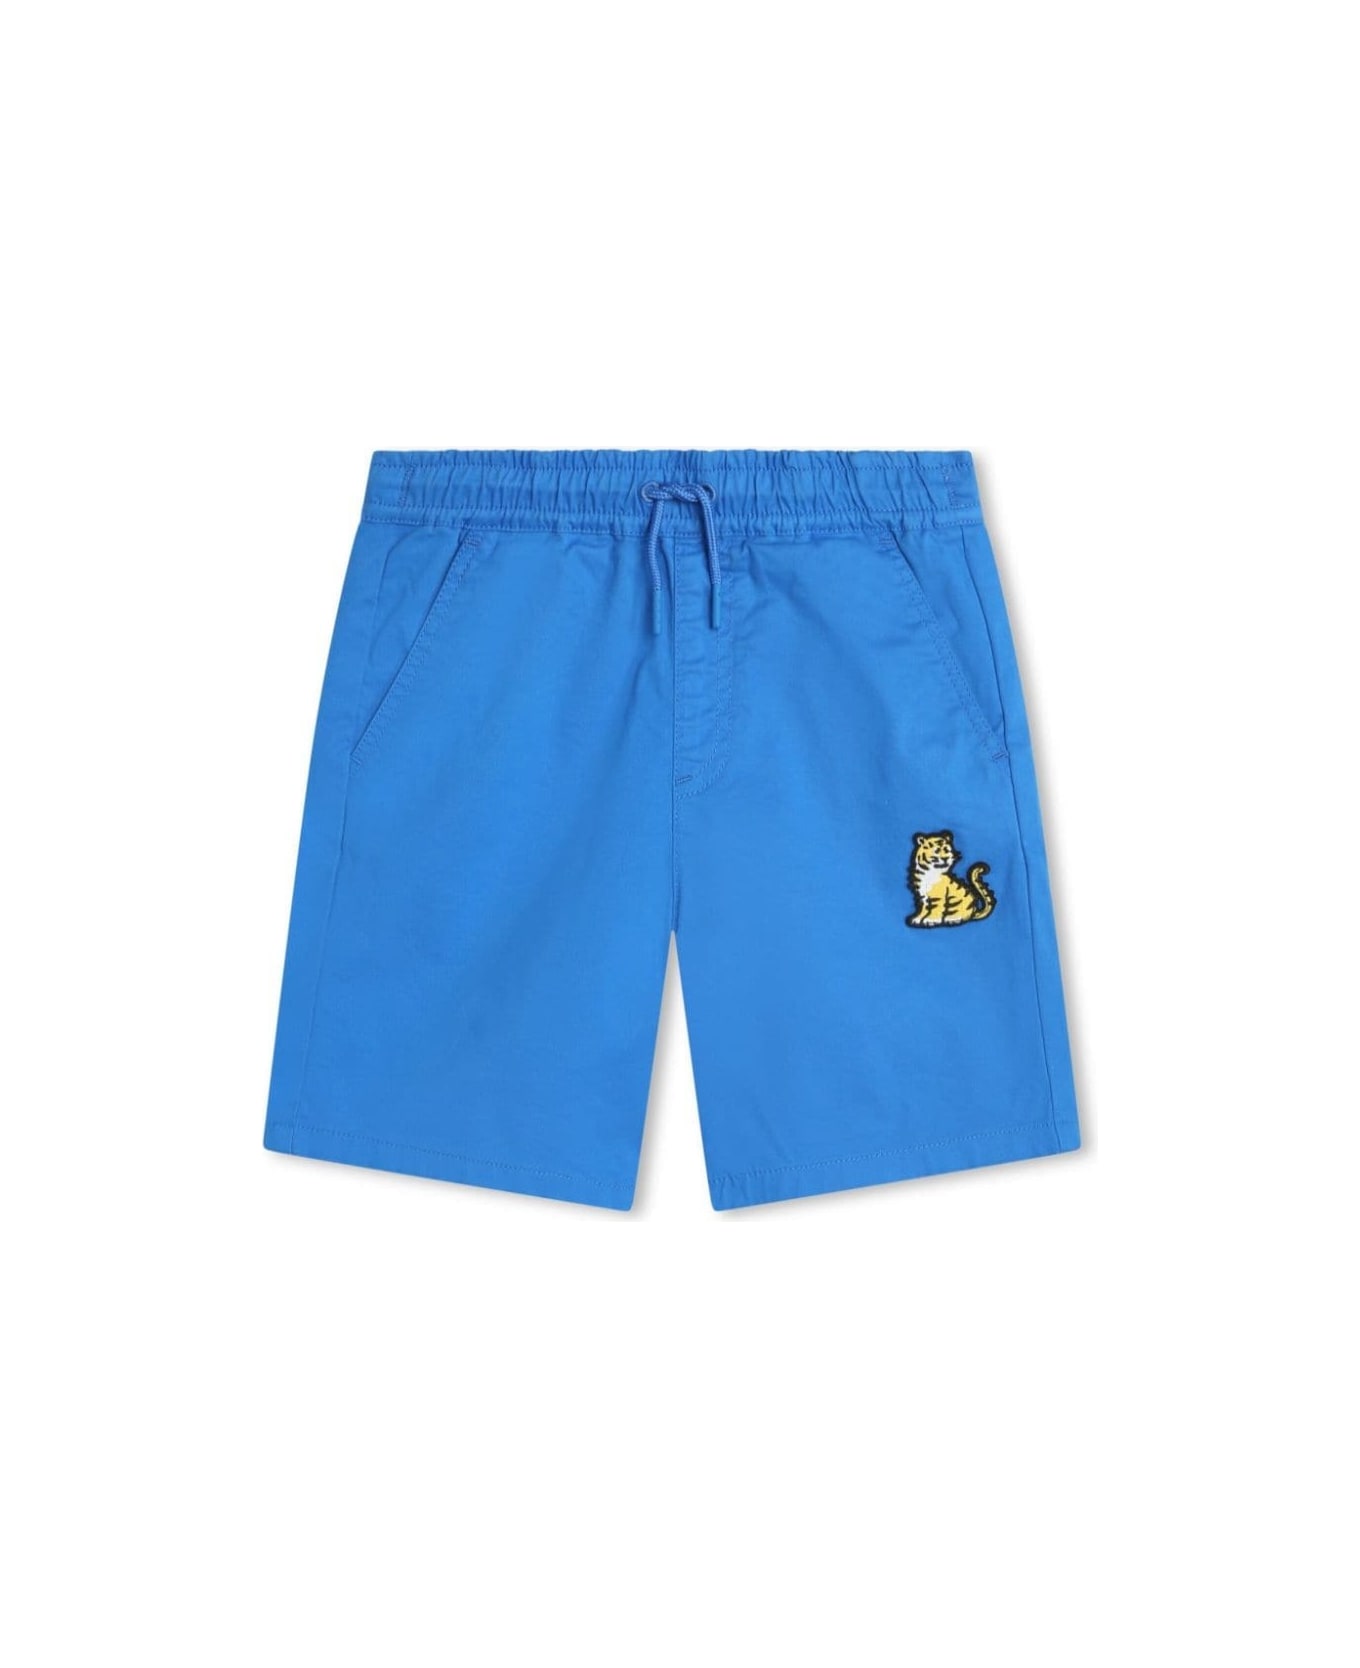 Kenzo Kids Blue Bermuda Shorts With Drawstring In Stretch Cotton Boy - Blu